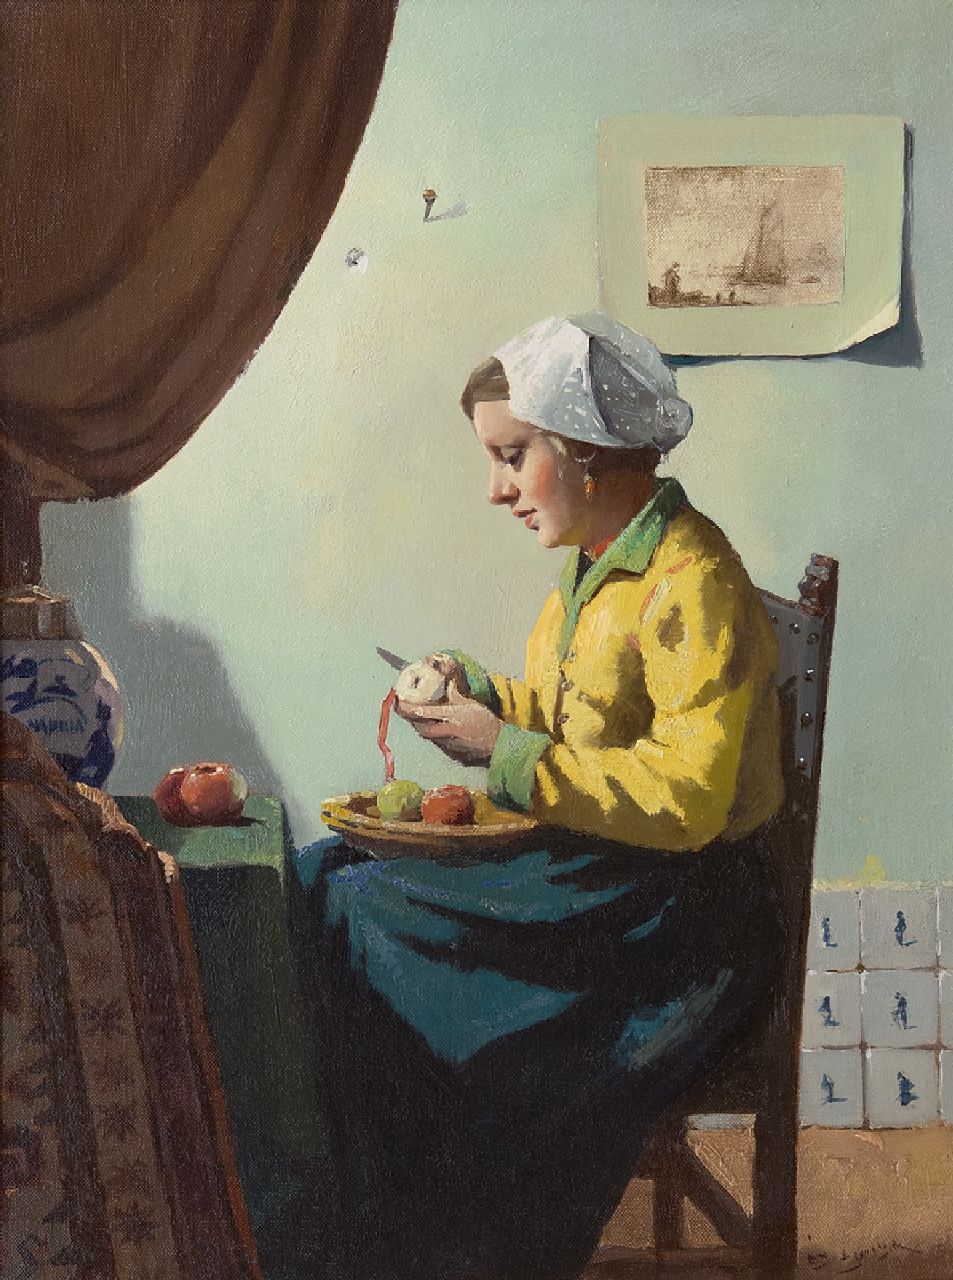 Ligtelijn E.J.  | Evert Jan Ligtelijn, Young girl peeling an apple, oil on canvas 40.2 x 30.4 cm, signed l.r.